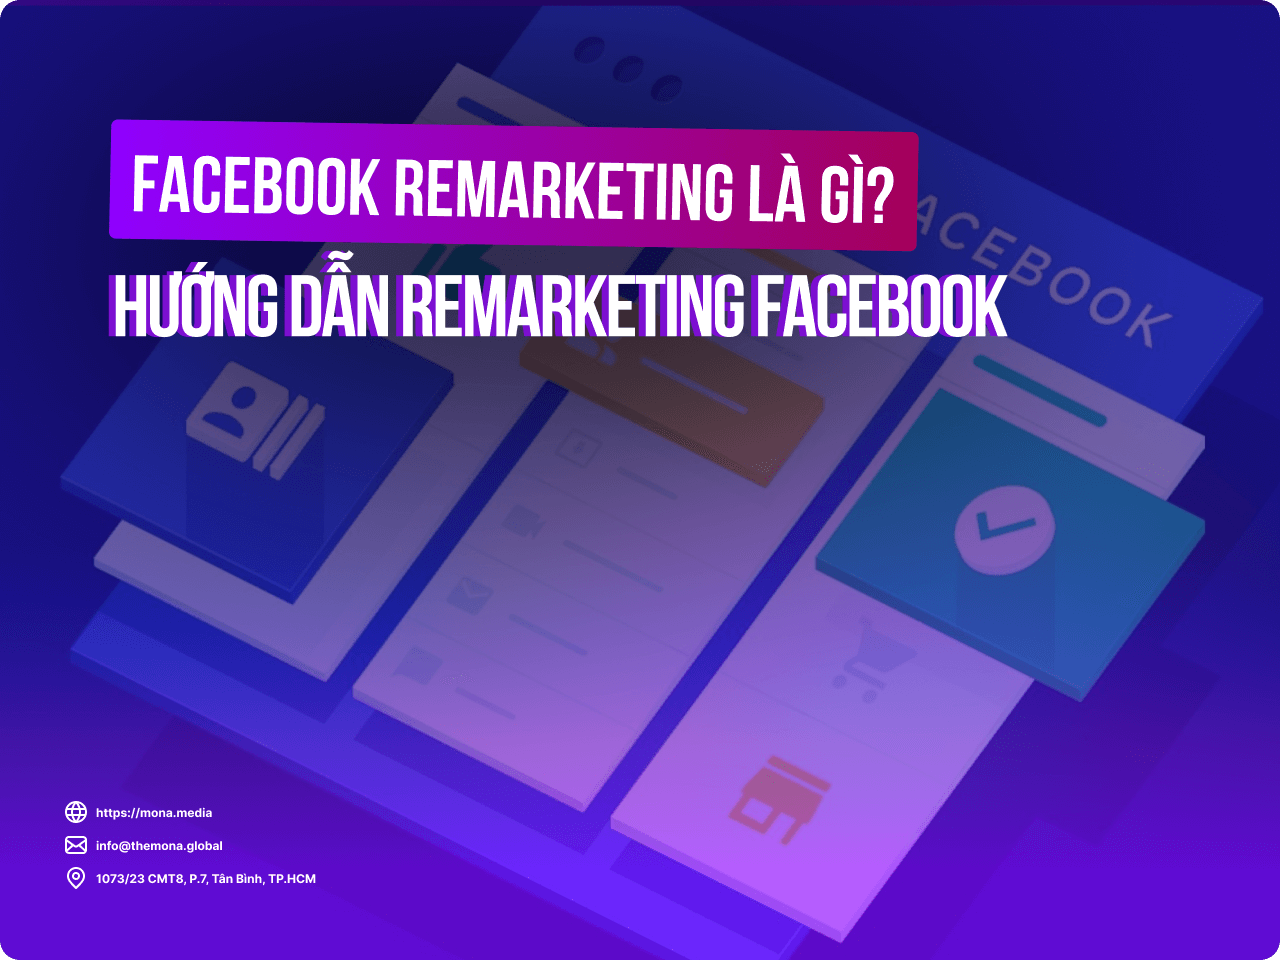 Facebook Remarketing là gì? Hướng dẫn Remarketing Facebook hiệu quả